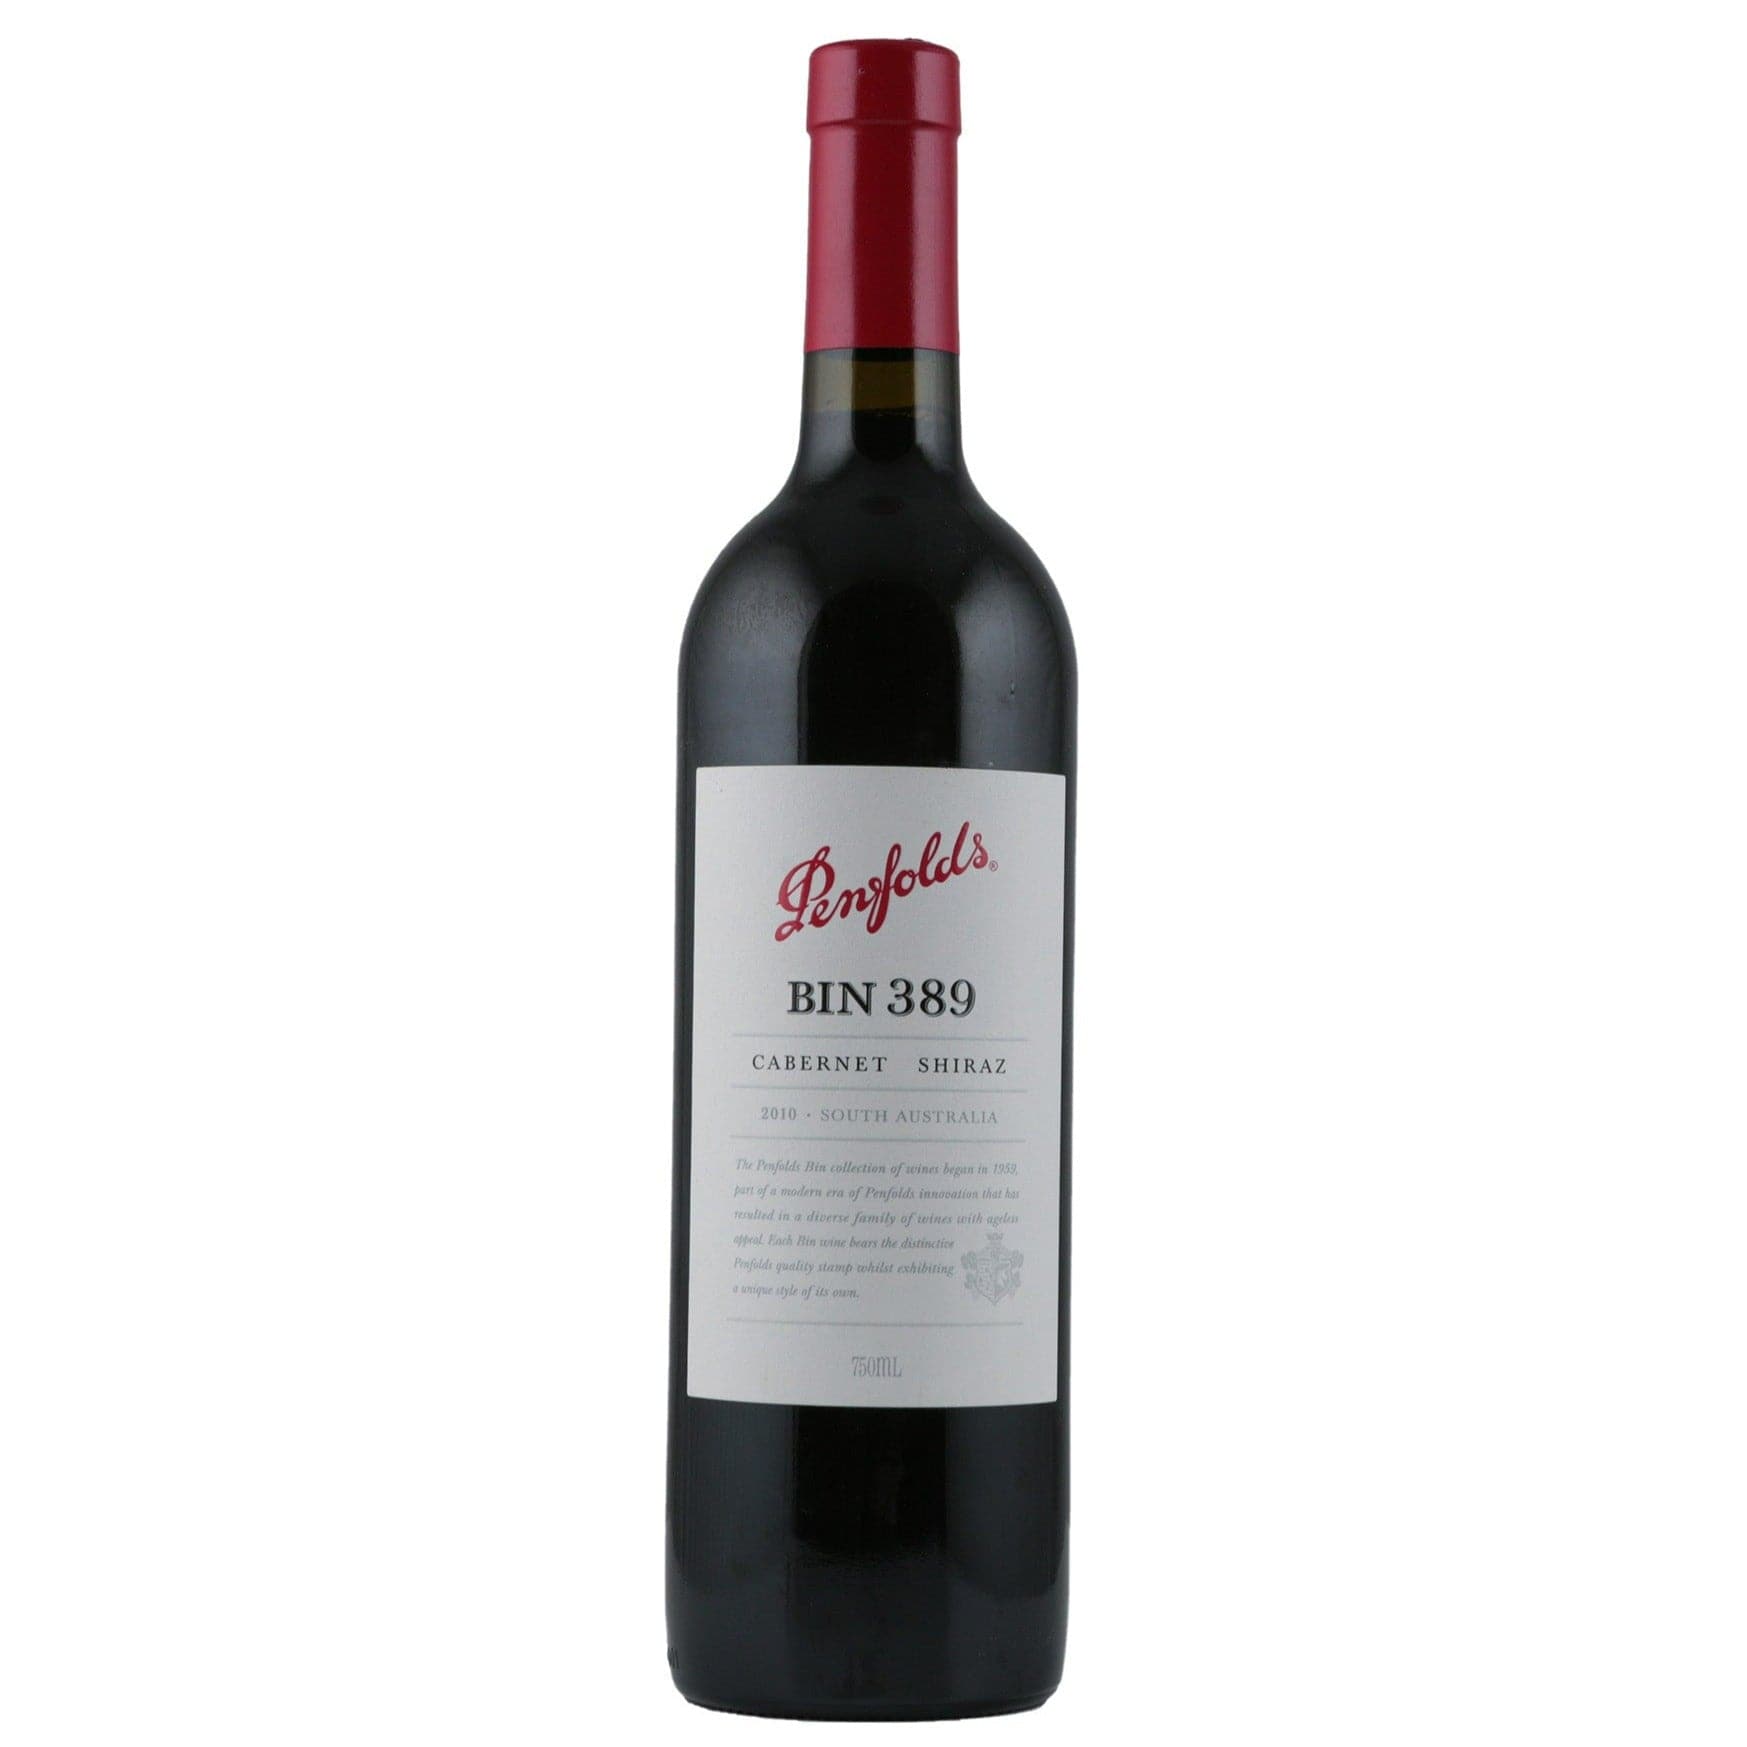 Single bottle of Red wine Penfolds, Bin 389 Cabernet Shiraz, South Australia, 2010 51% Cabernet Sauvignon & 49% Shiraz